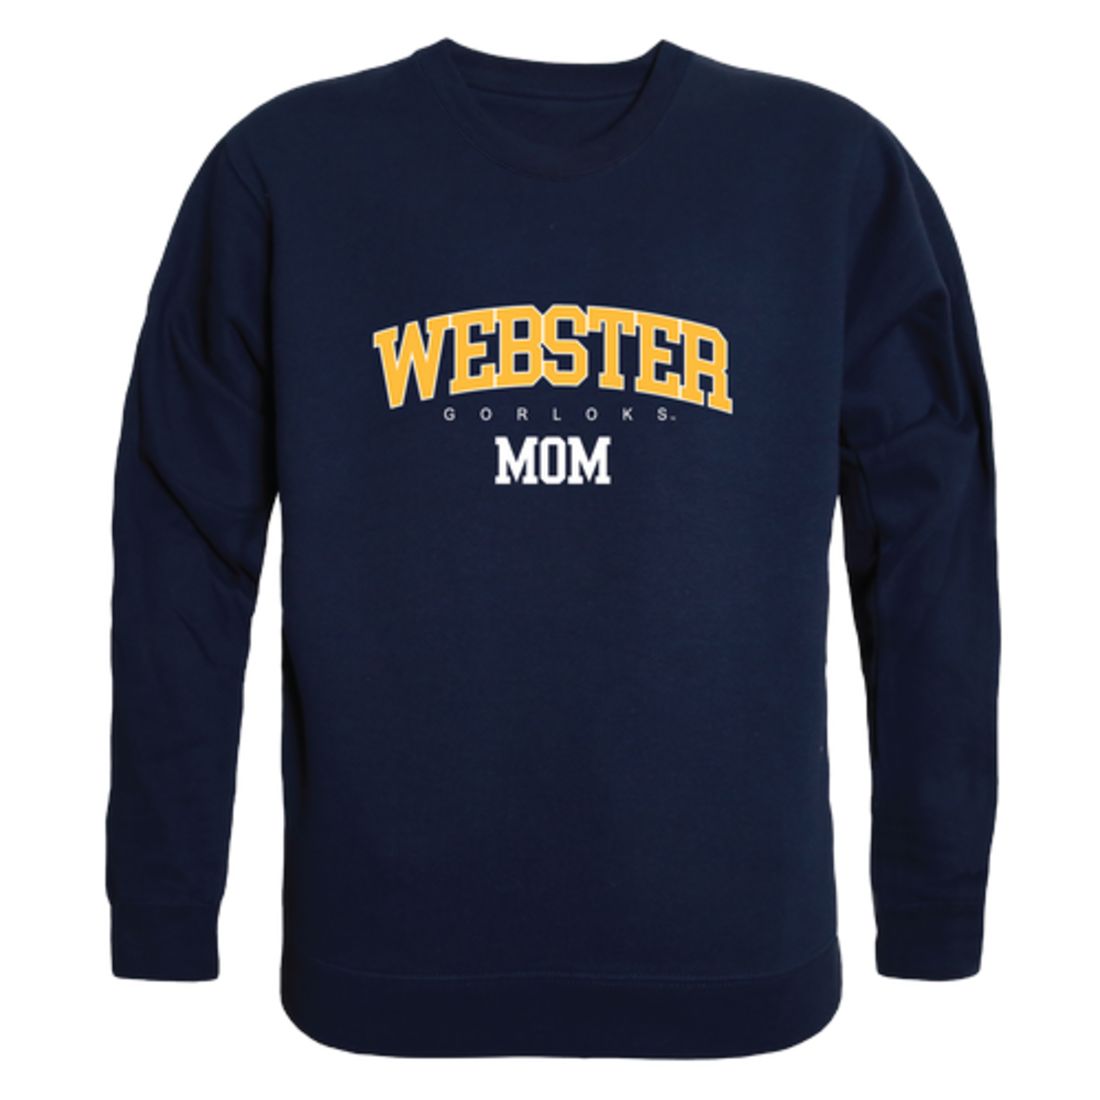 Webster University Gorlocks Mom Fleece Crewneck Pullover Sweatshirt